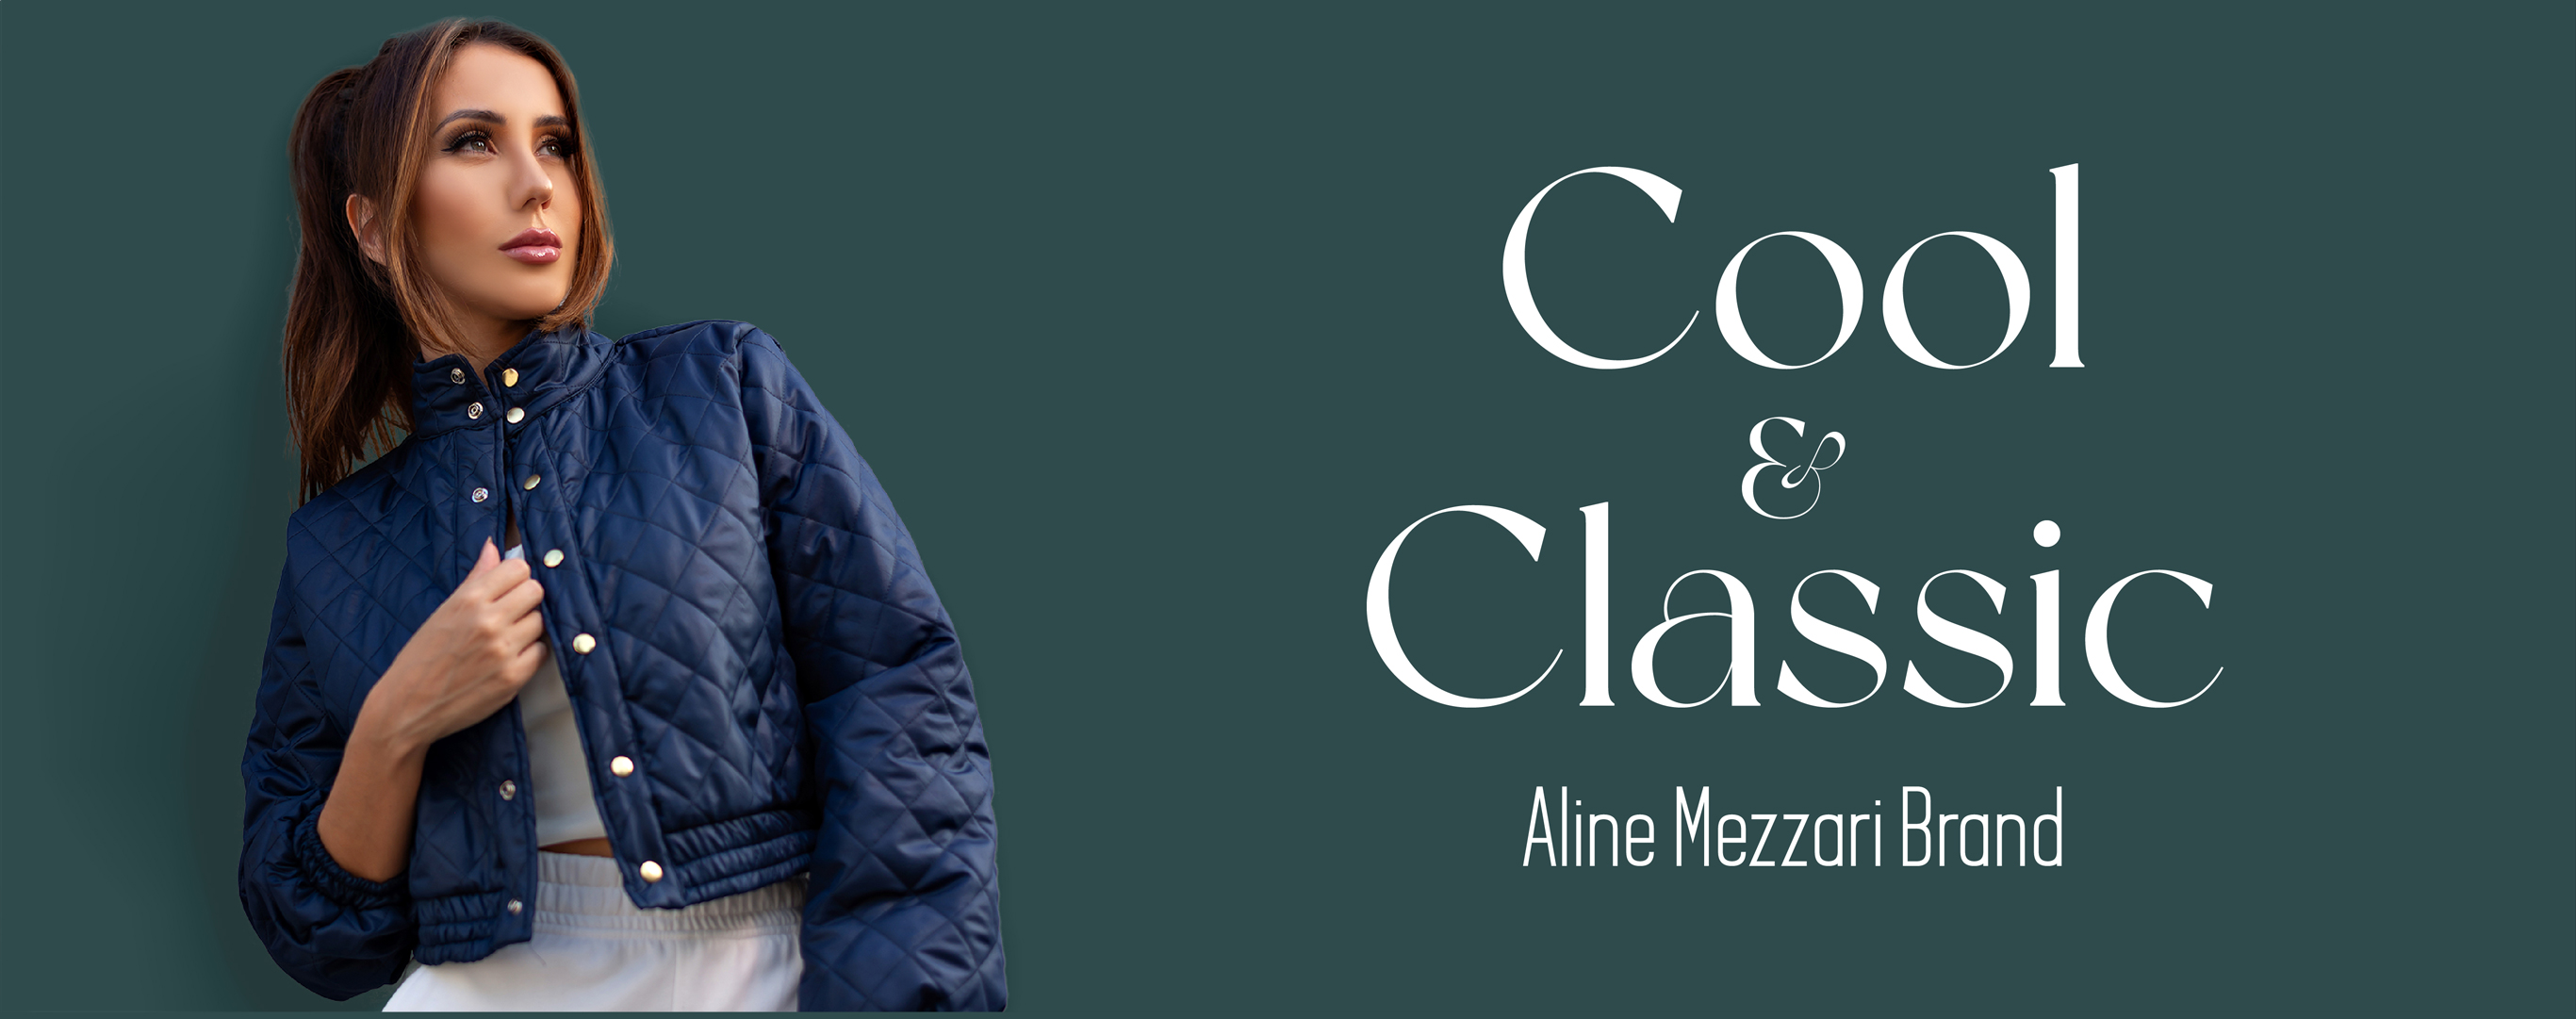 Banner Aline Mezzari Brand